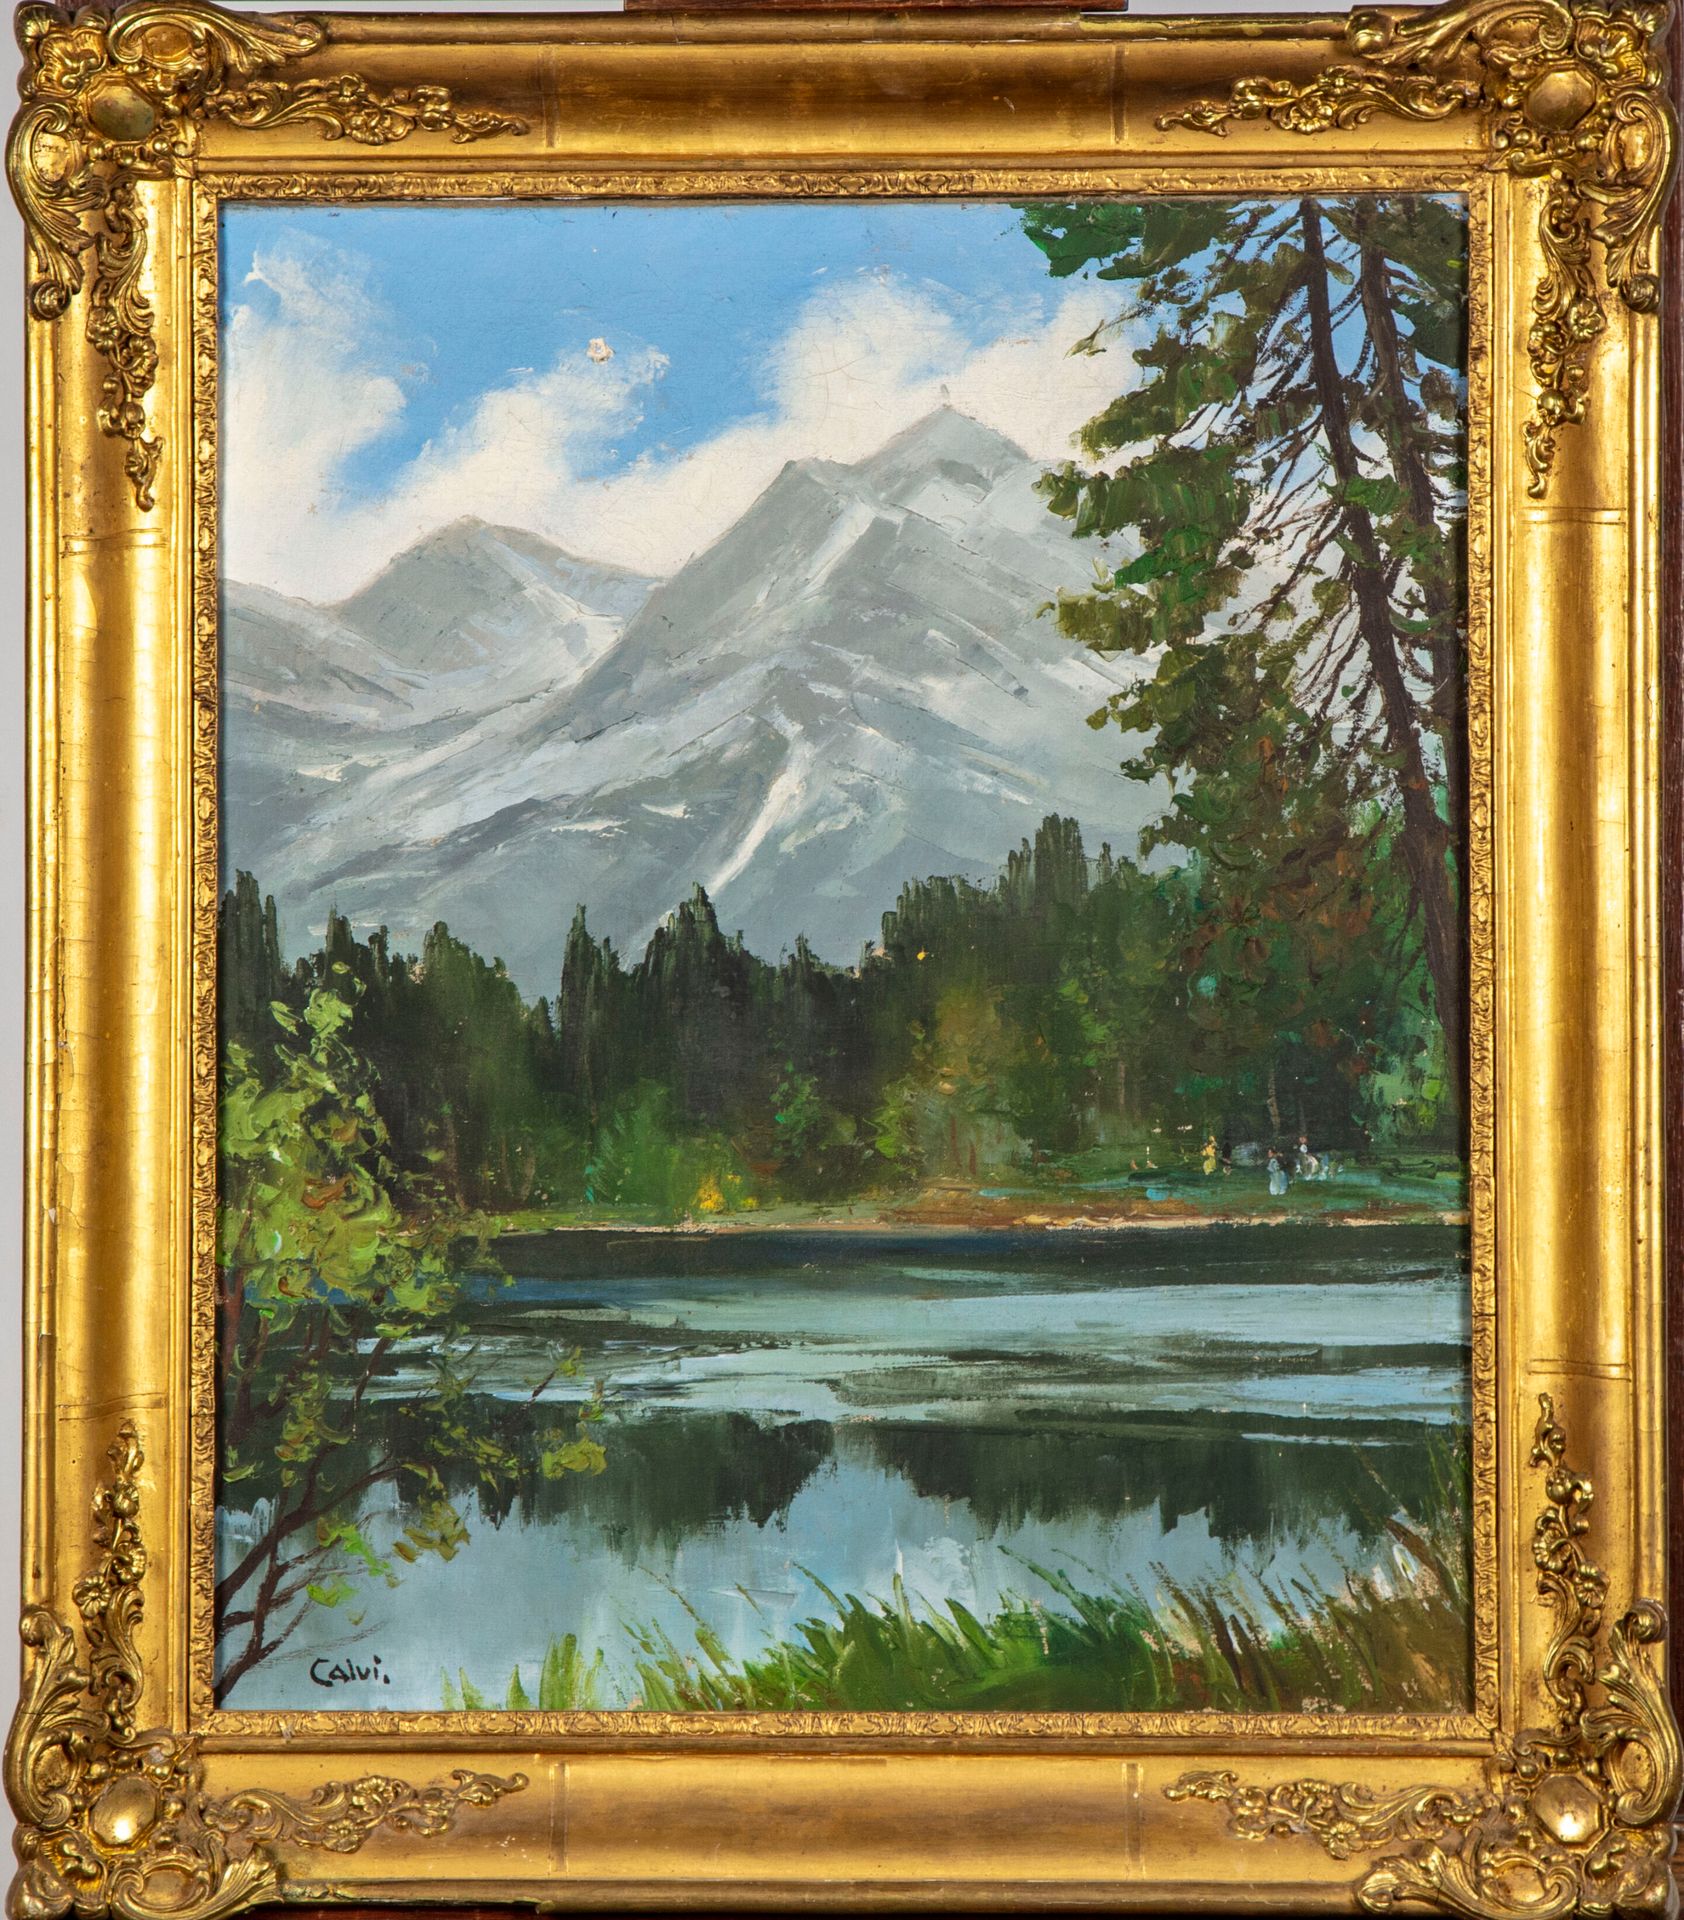 Null CALVI (1938)

山地湖泊

布面油画，左下角有签名

54 x 45 厘米

有框

画布损坏和缺乏材料，框架损坏